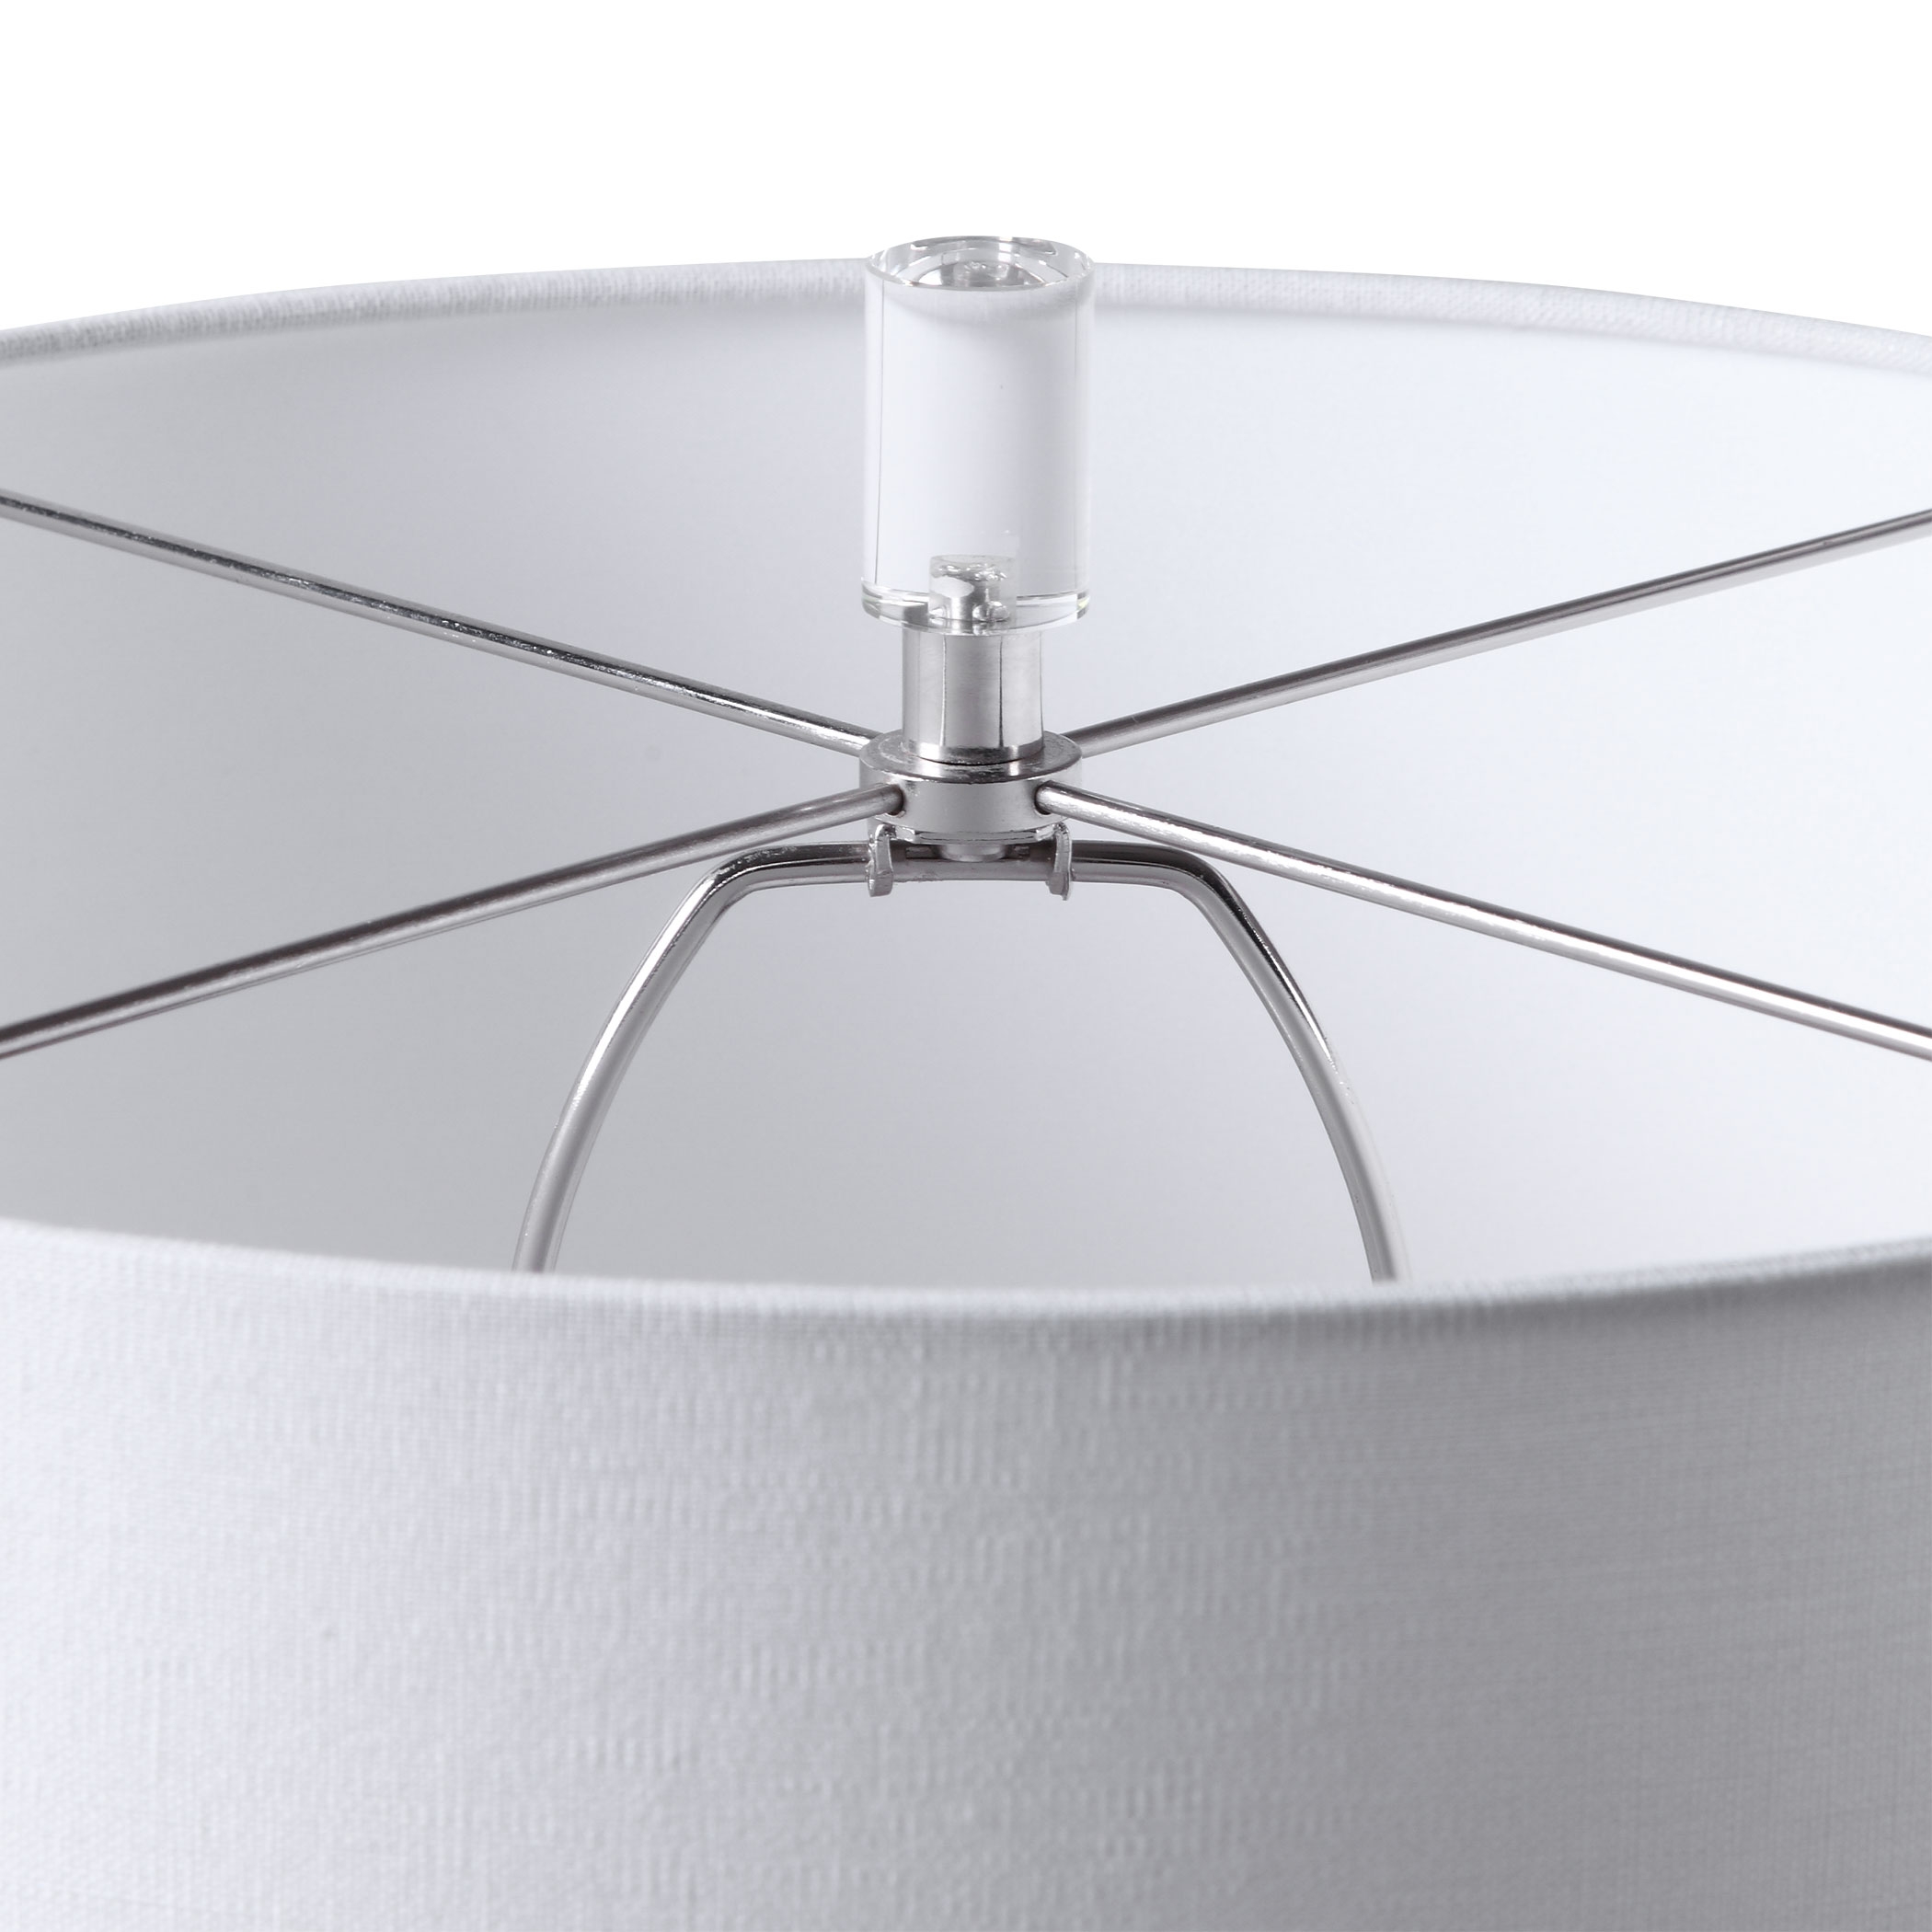 Caelina Textured Table Lamp, White - Image 1